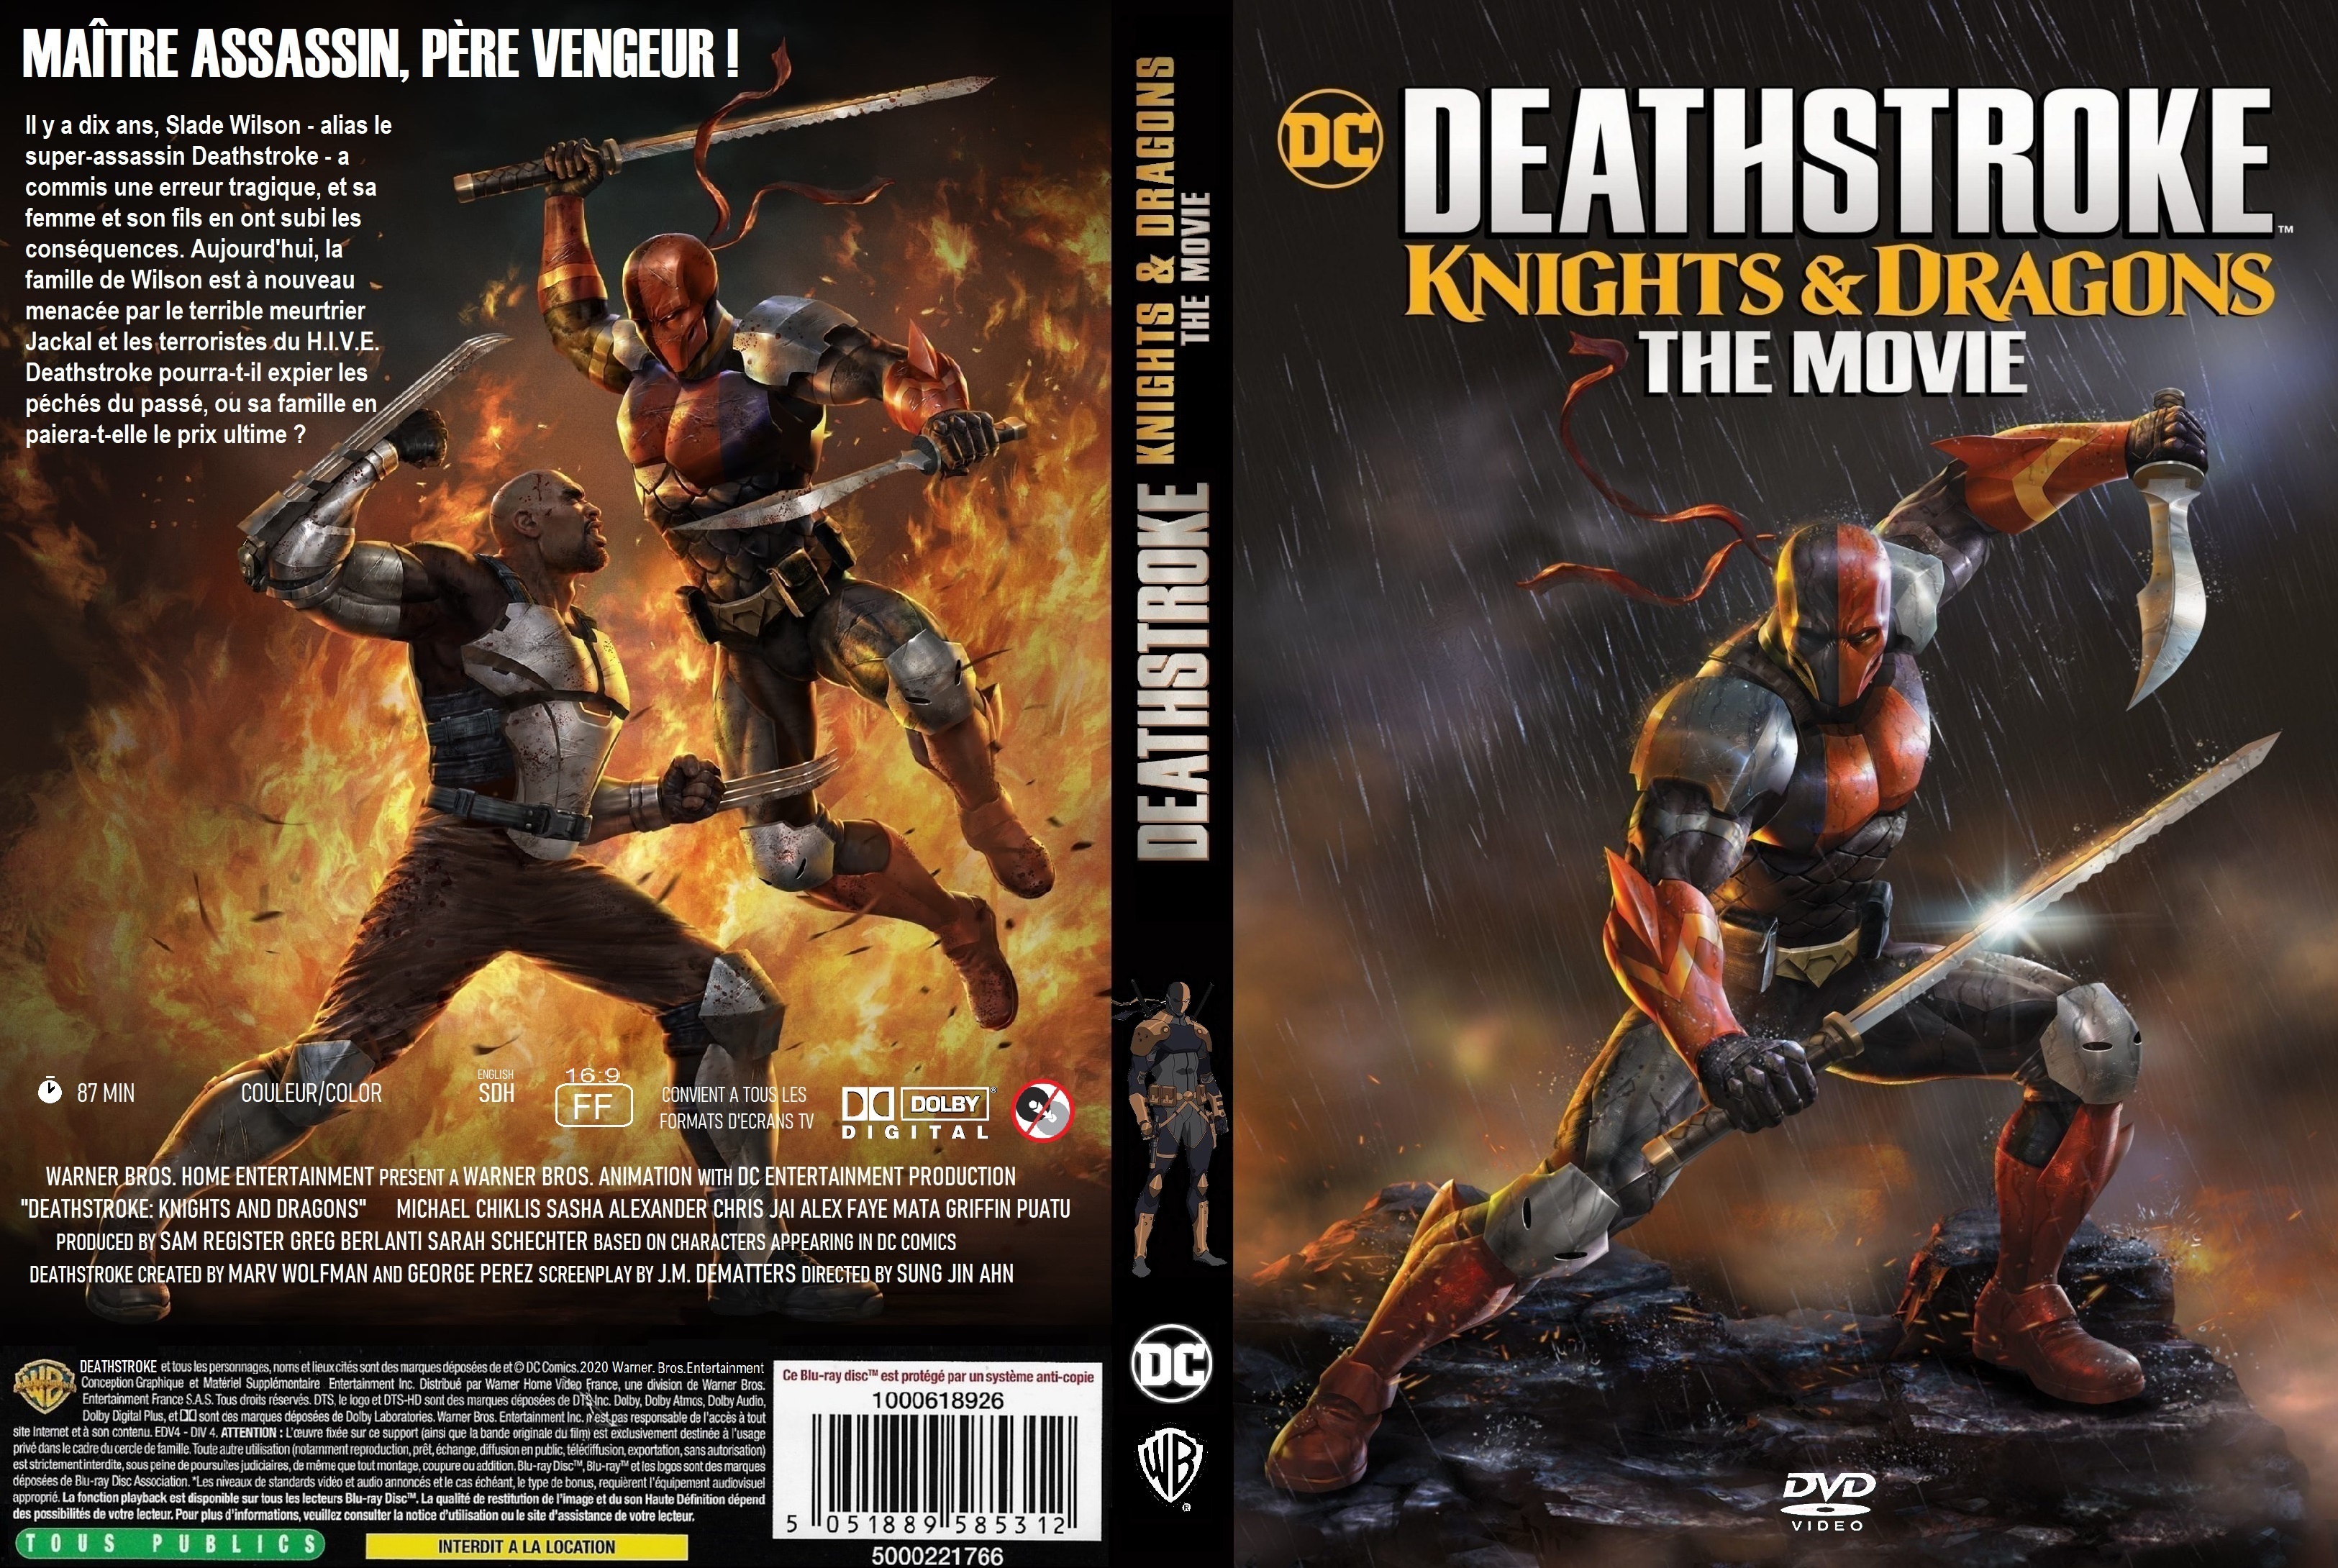 Jaquette DVD Deathstroke Knights & Dragons custom